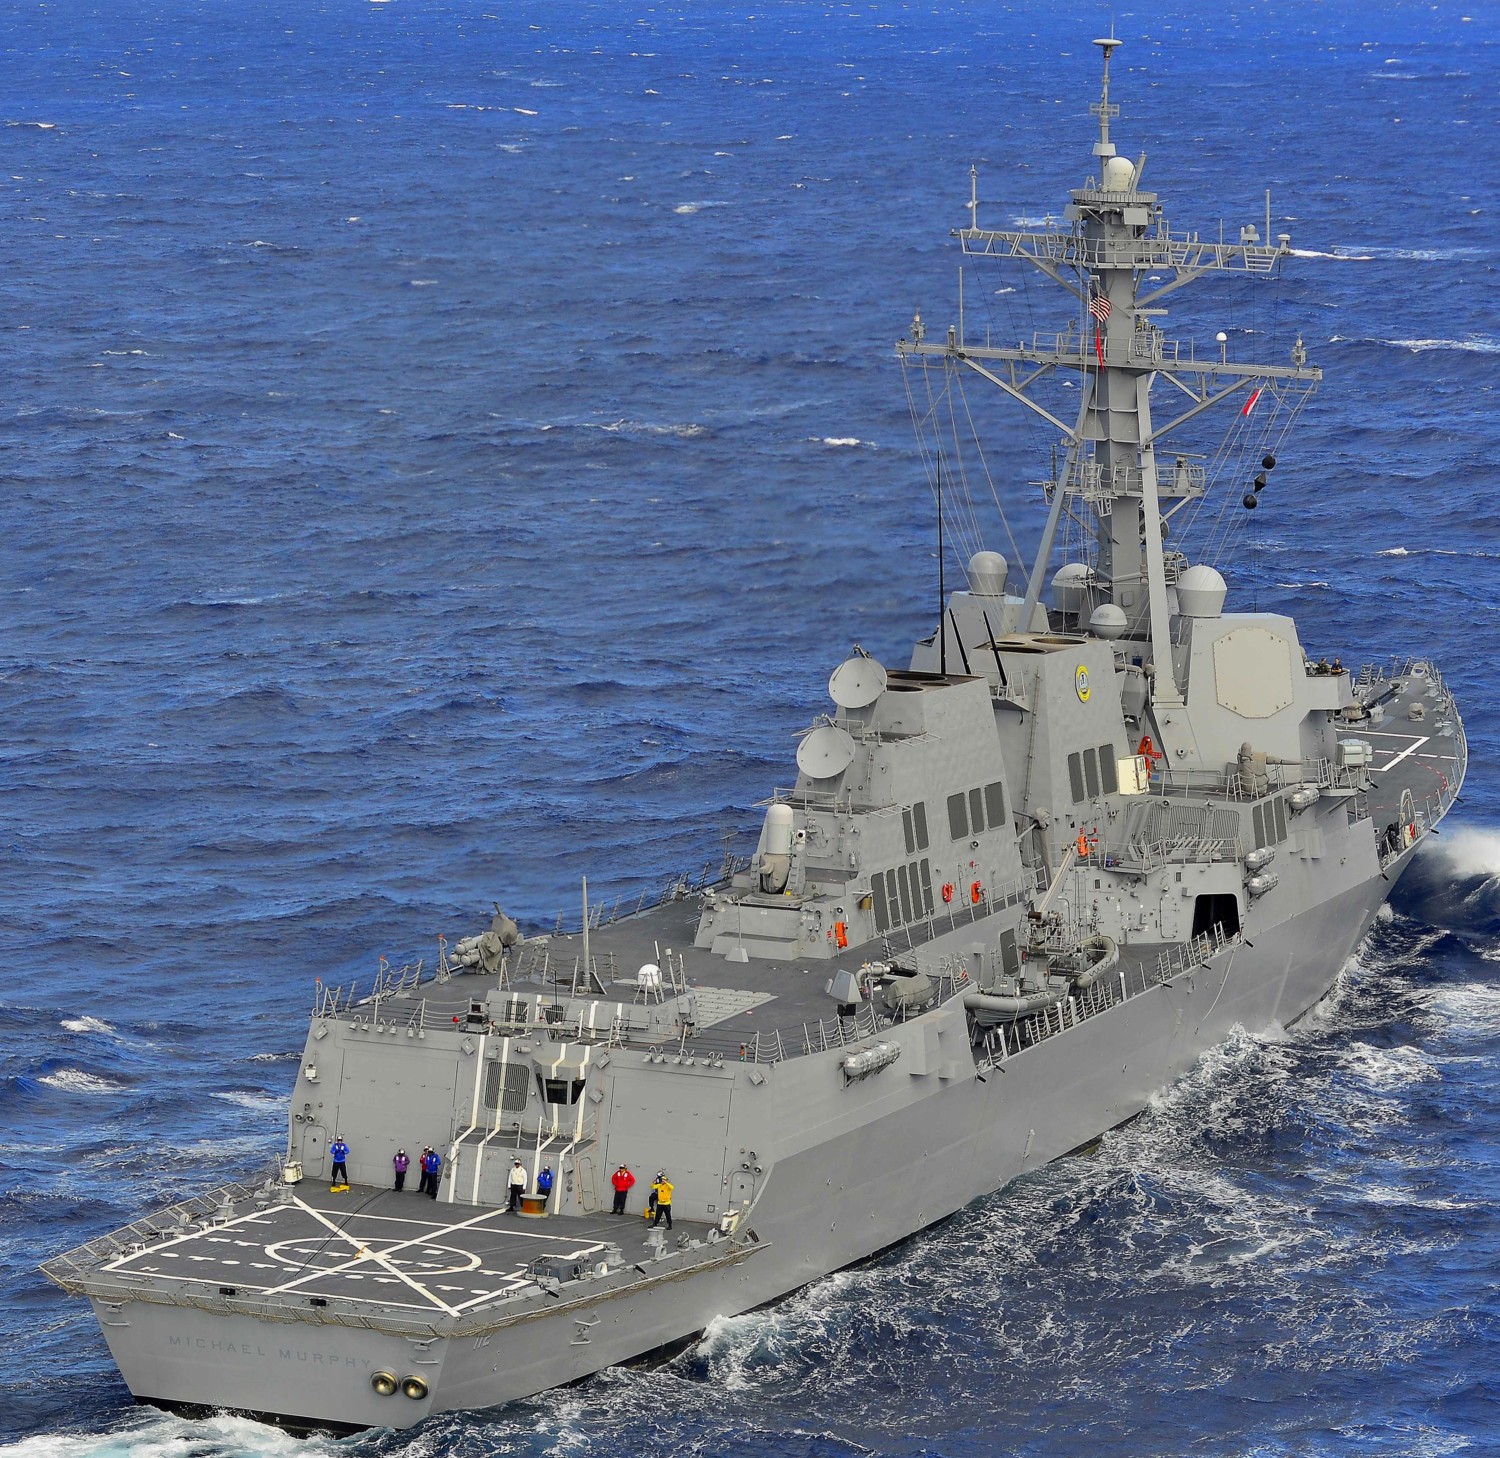 ddg-112 uss michael murphy arleigh burke class guided missile destroyer aegis us navy 16 exercise koa-kai 14-1 hawaii